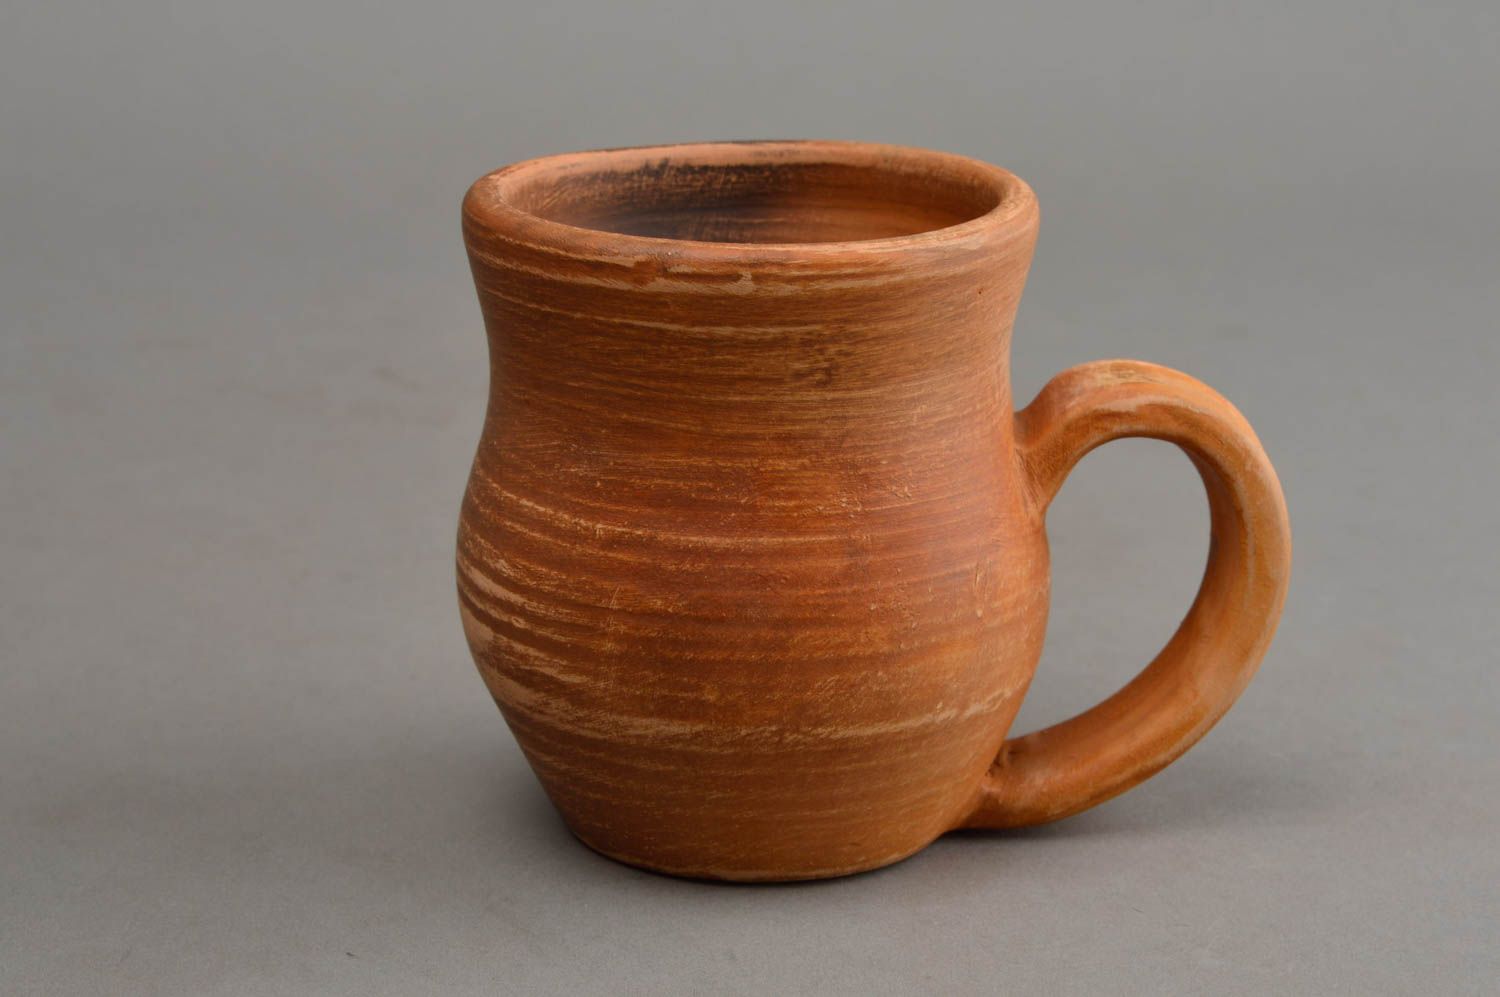  8 oz ceramic creamer pitcher mug in village style 0,5 lb photo 2